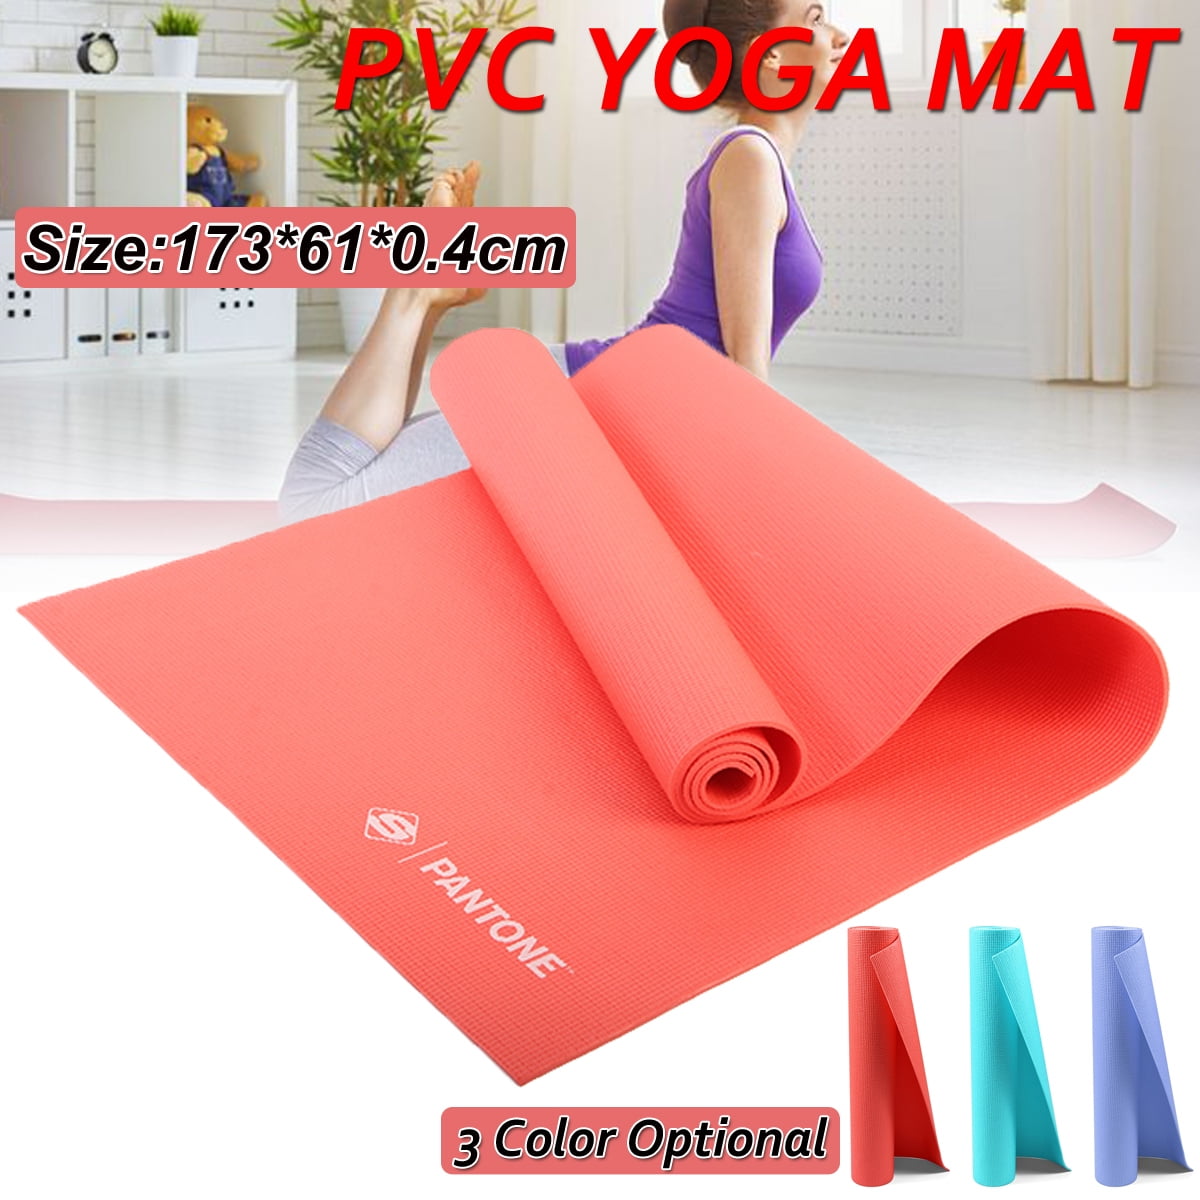 PANTONE Yoga Mat Pilates Non Slip Exercise Fitness PVC Mat with Carrying Strap 